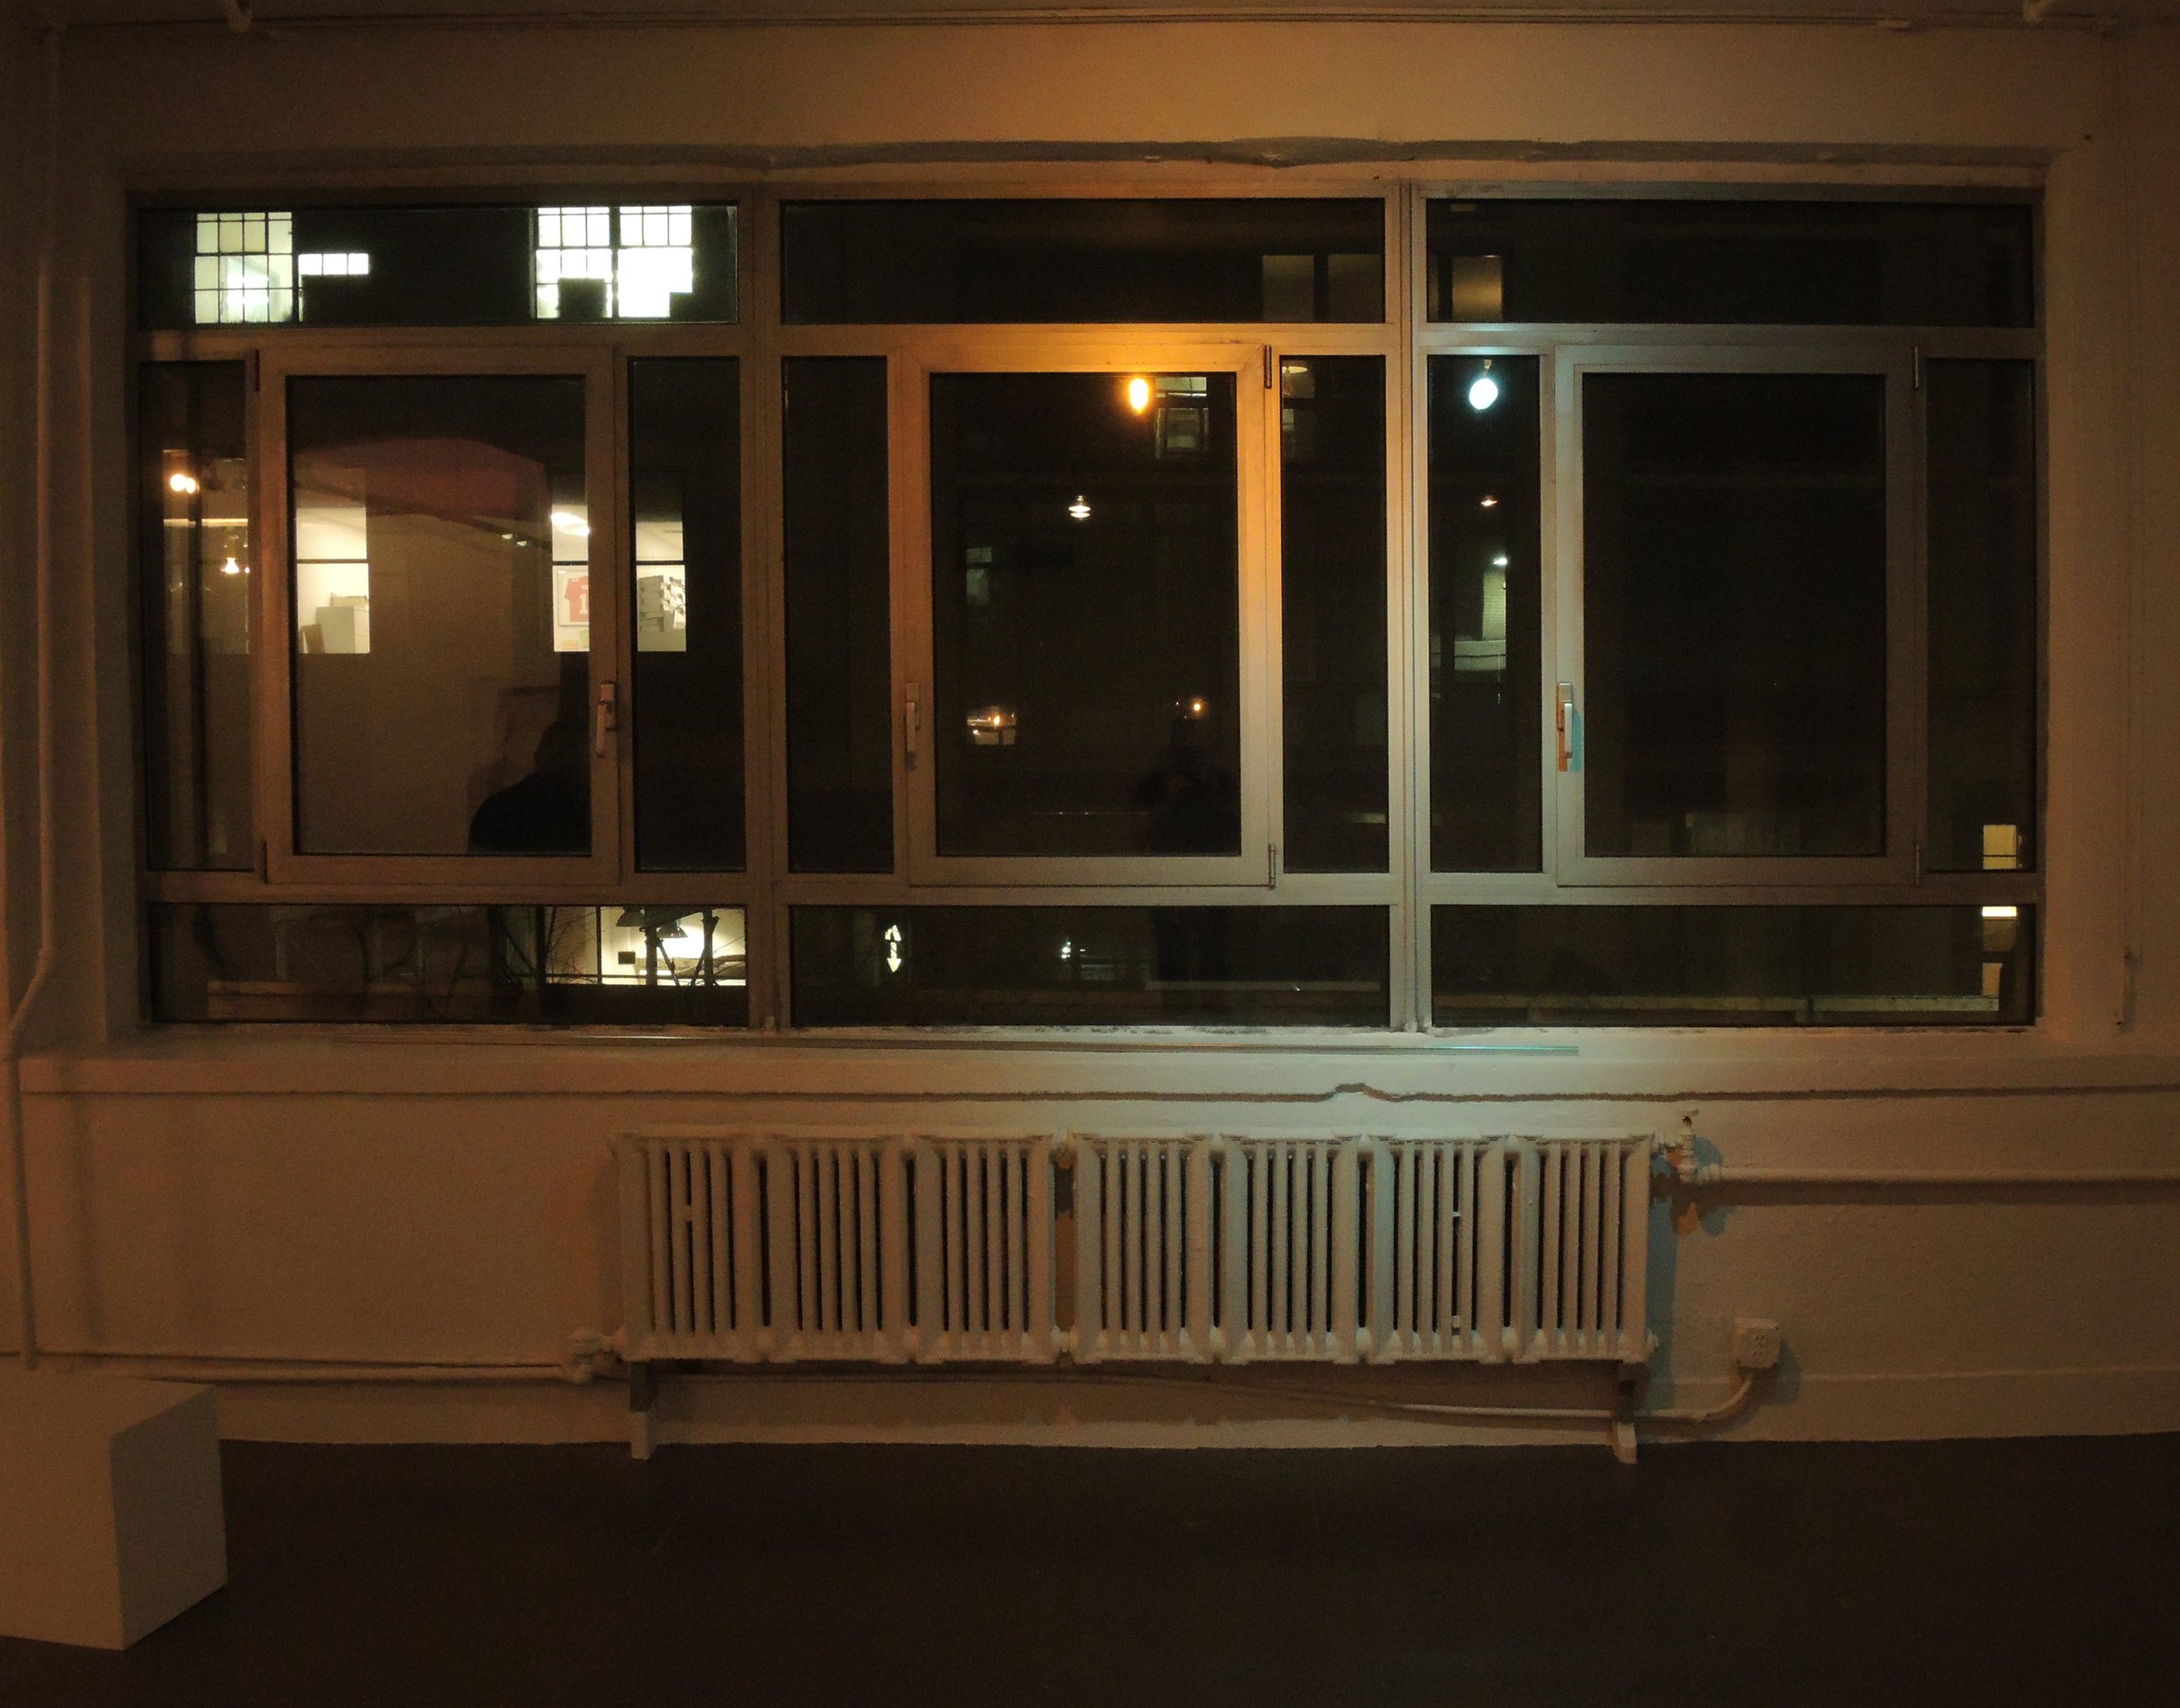 Warm light vs. cold light converge on the window frames. 